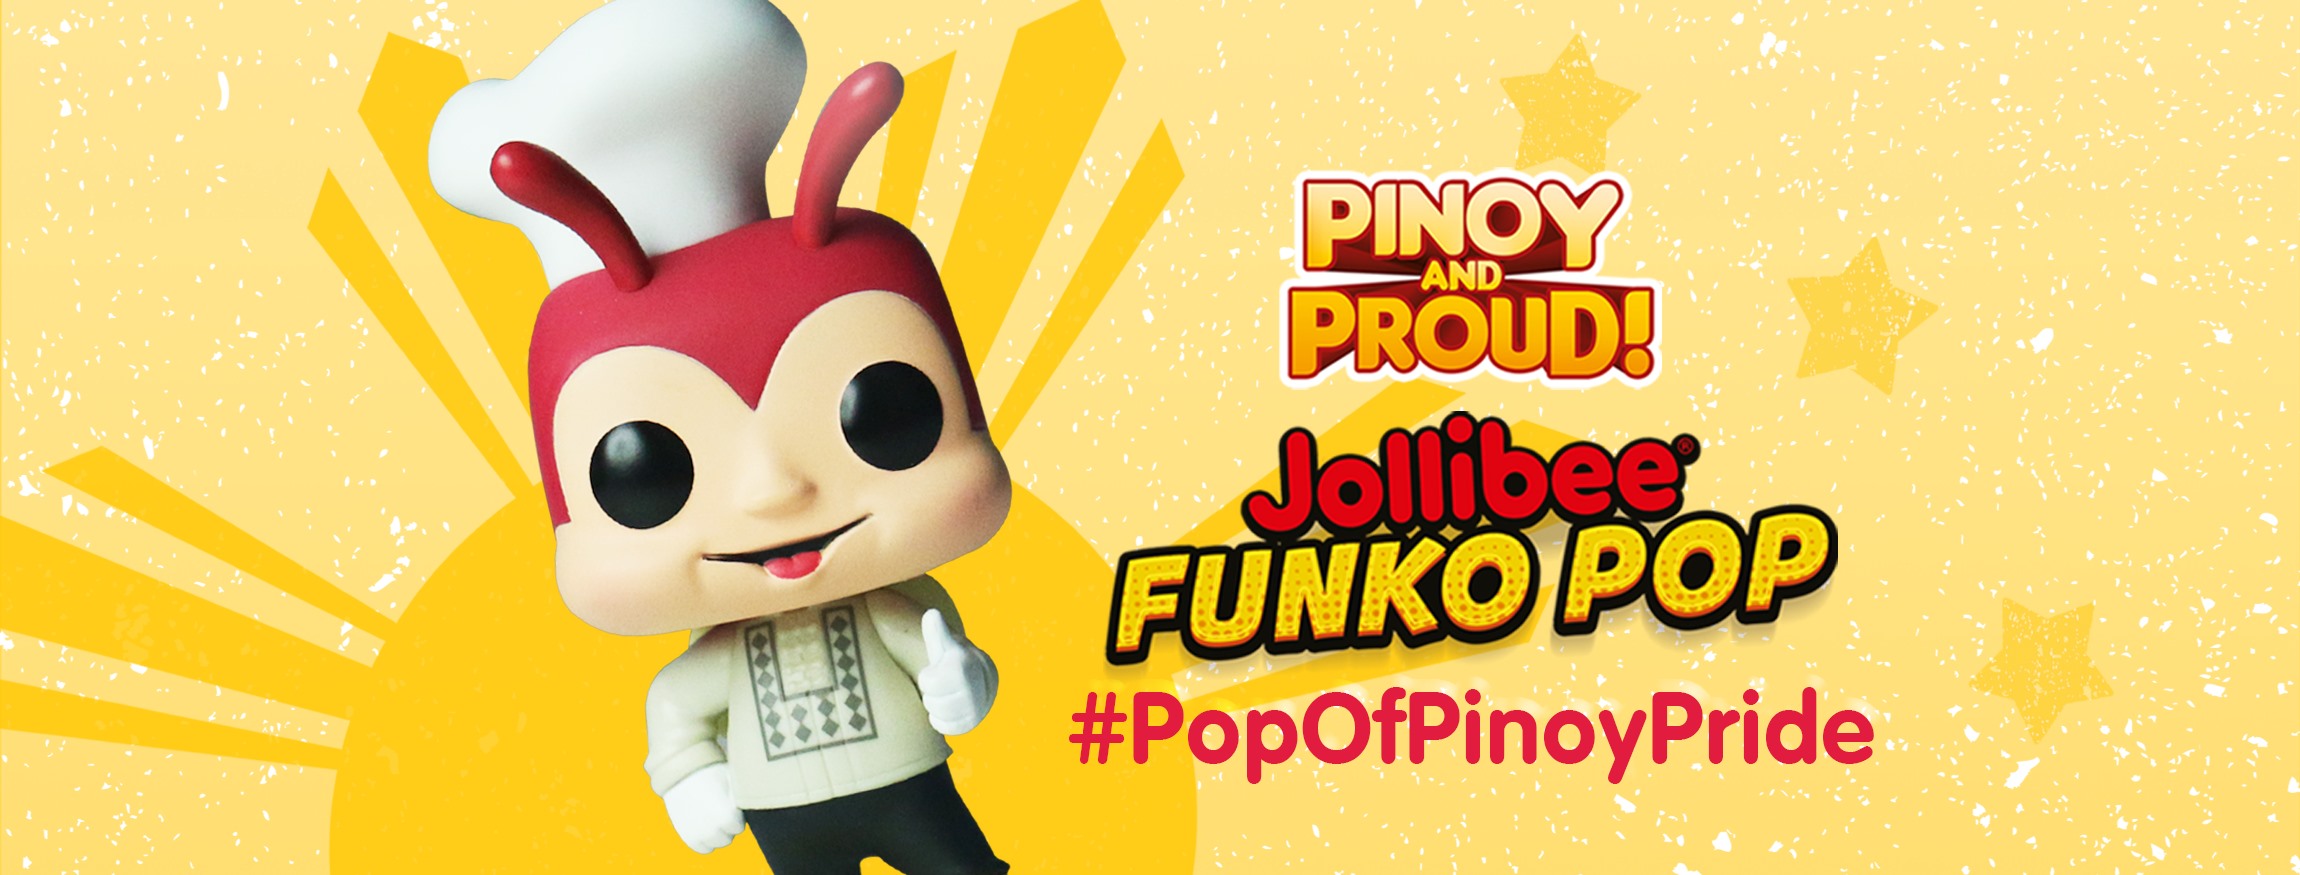 Jollibee in Philippine Barong Funko Pop